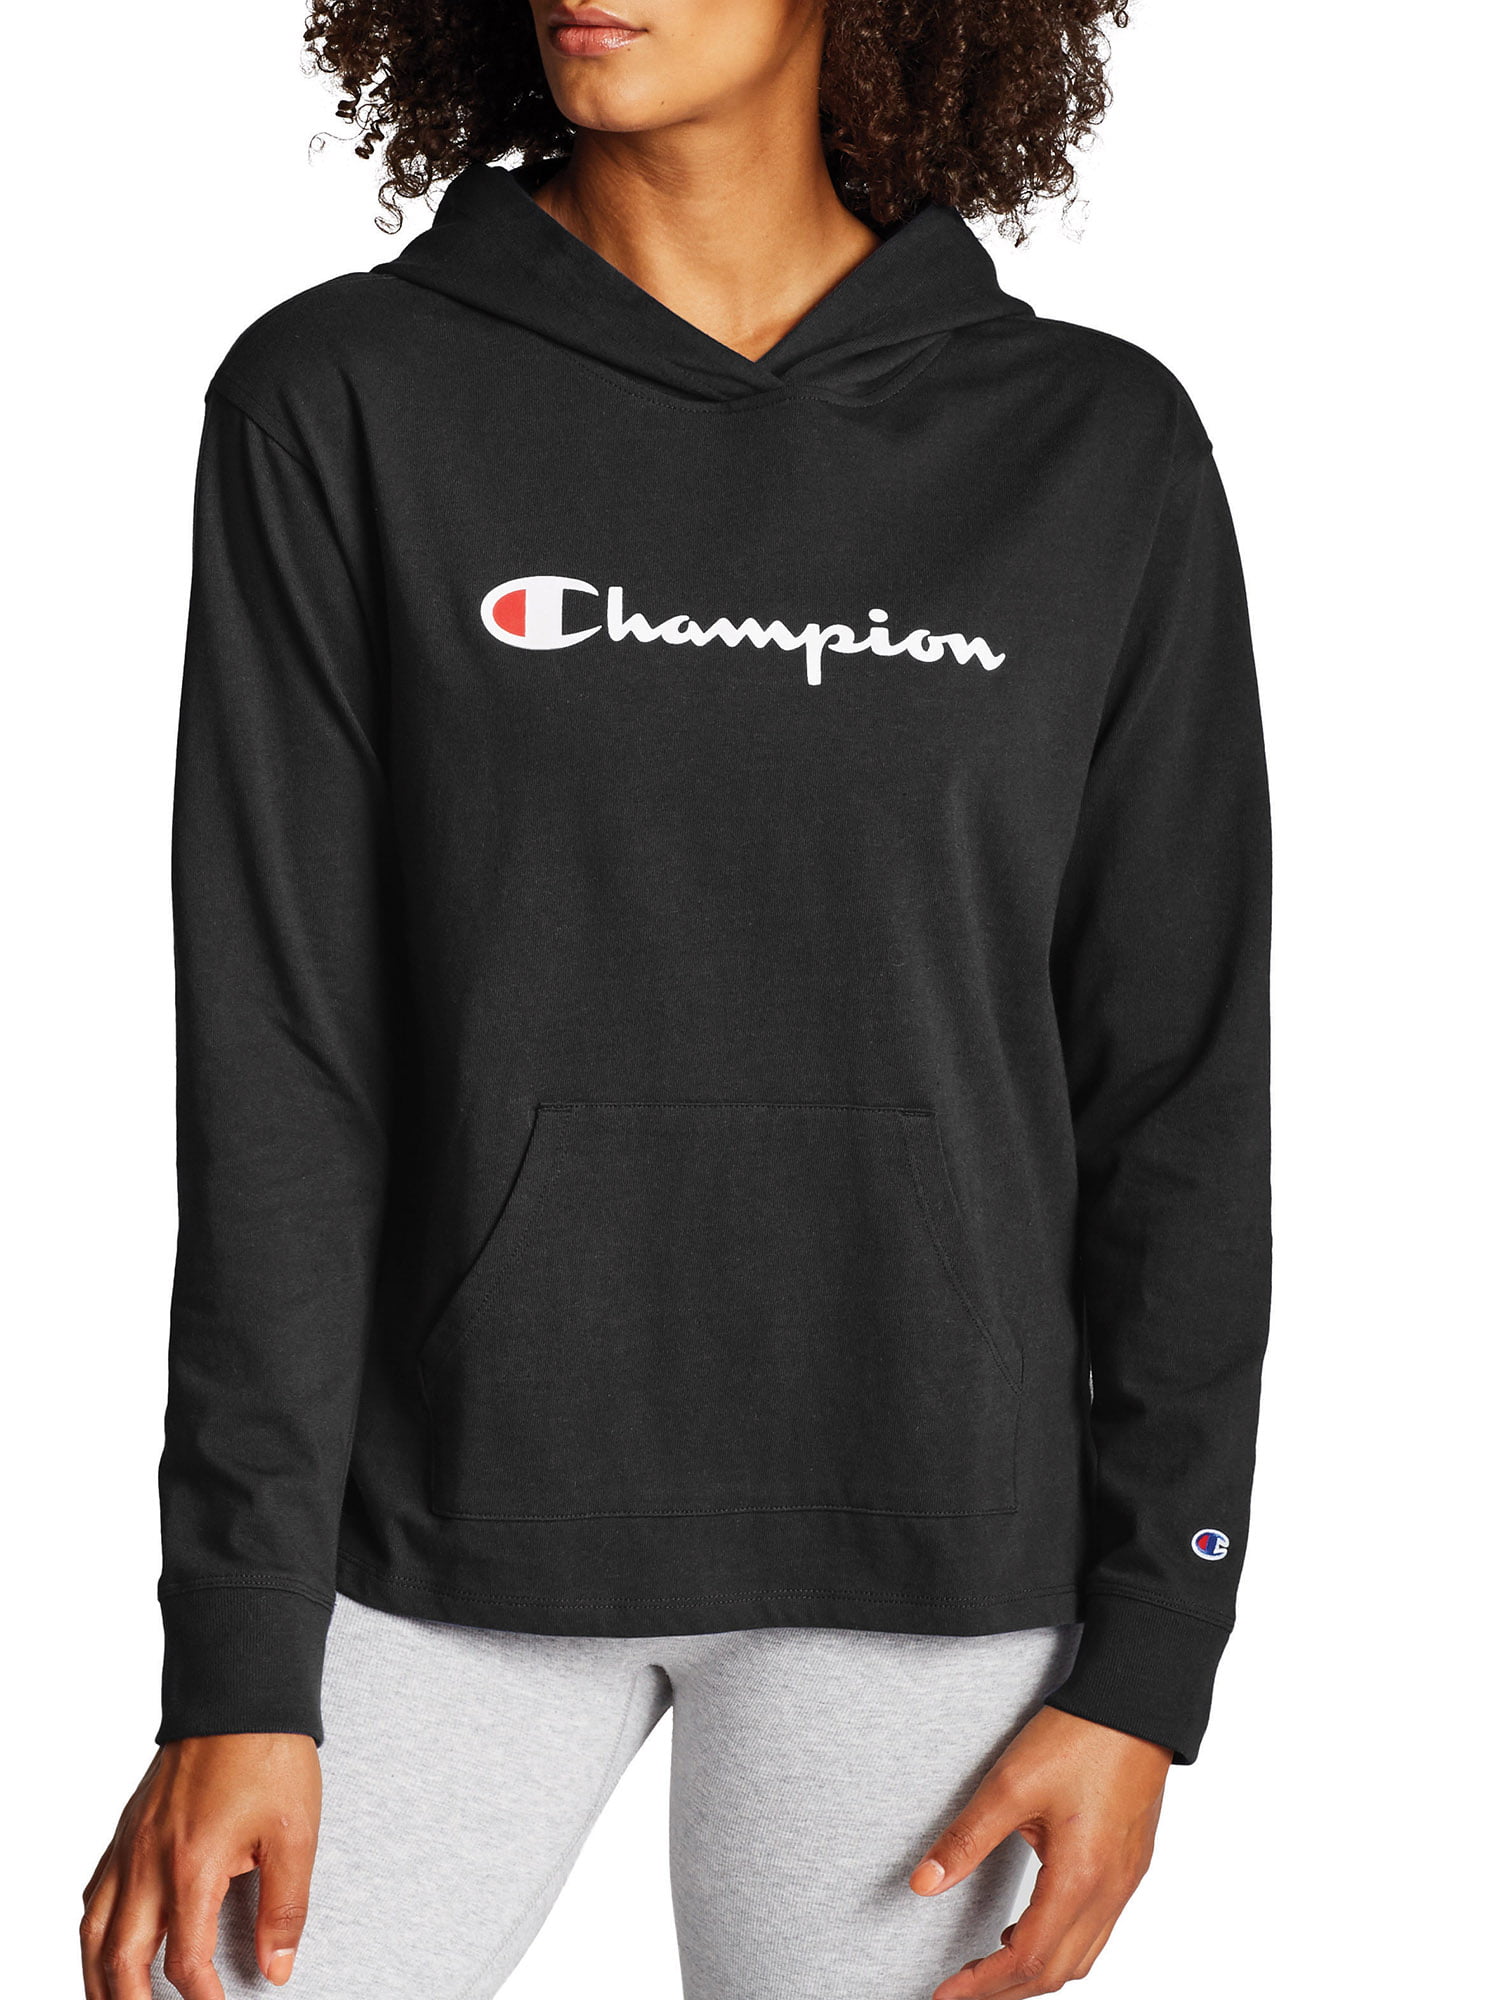 champion hoodie walmart womens